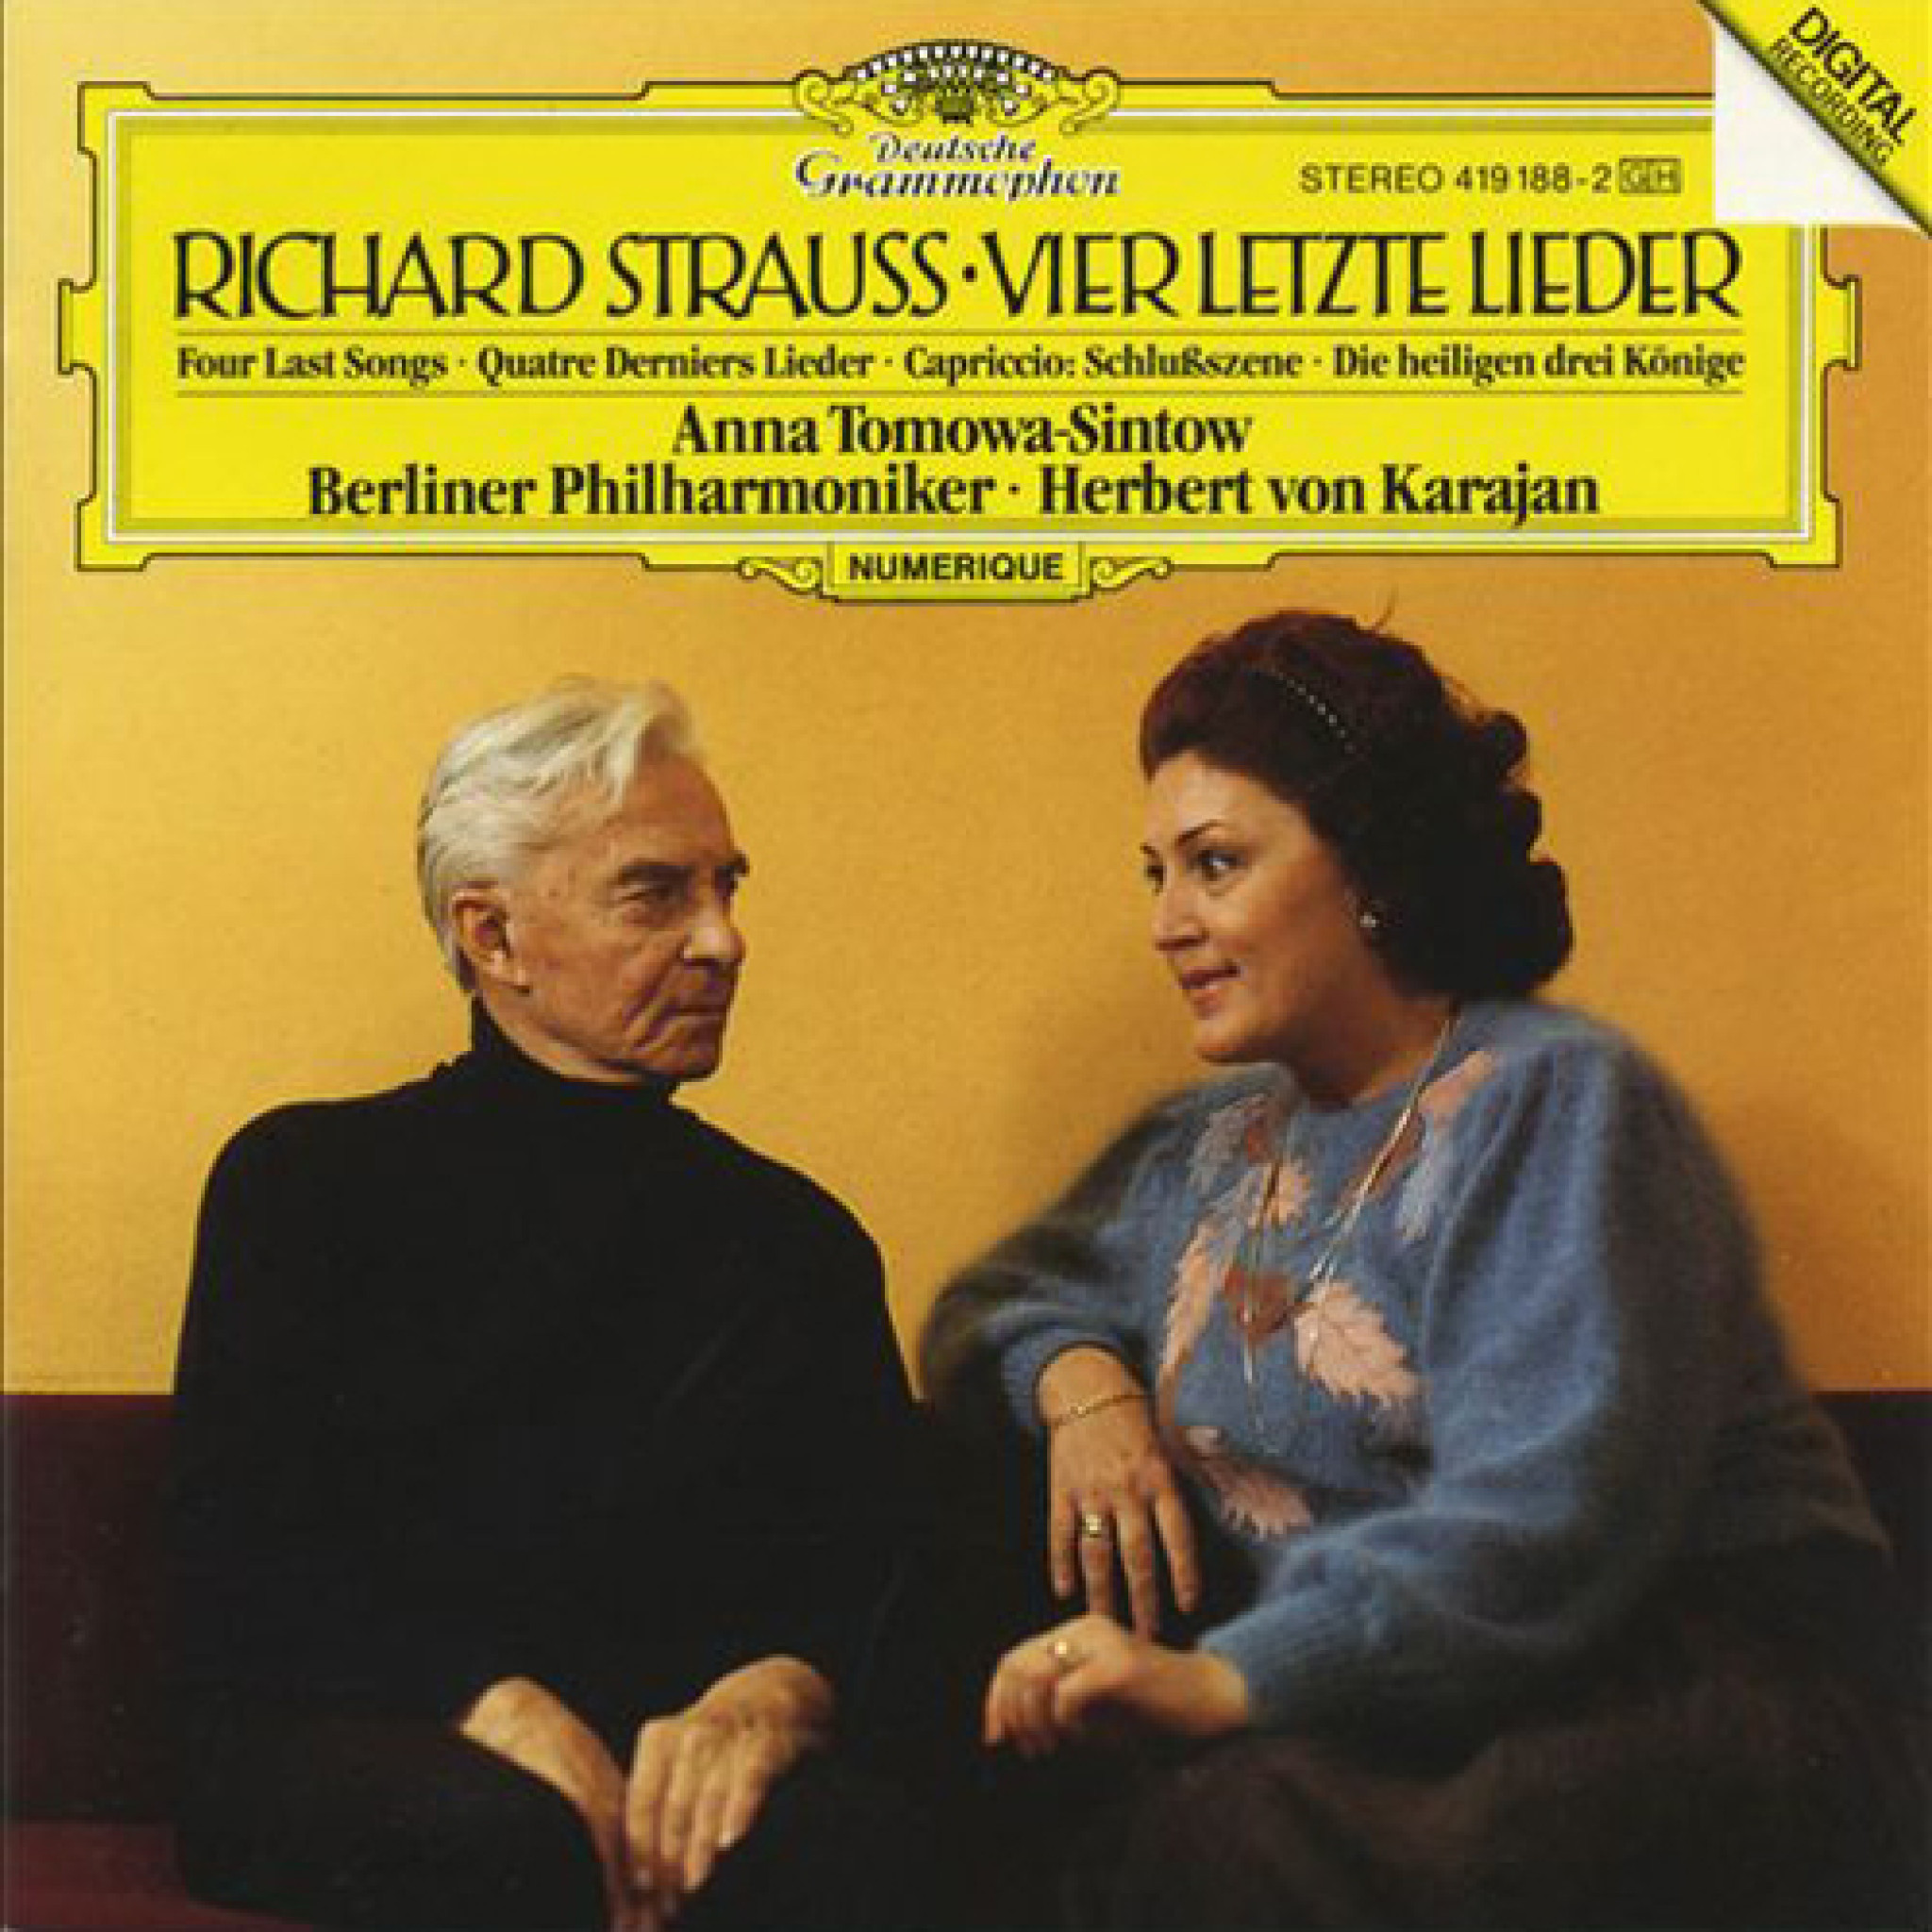 Richard Strauss: Four Last Songs